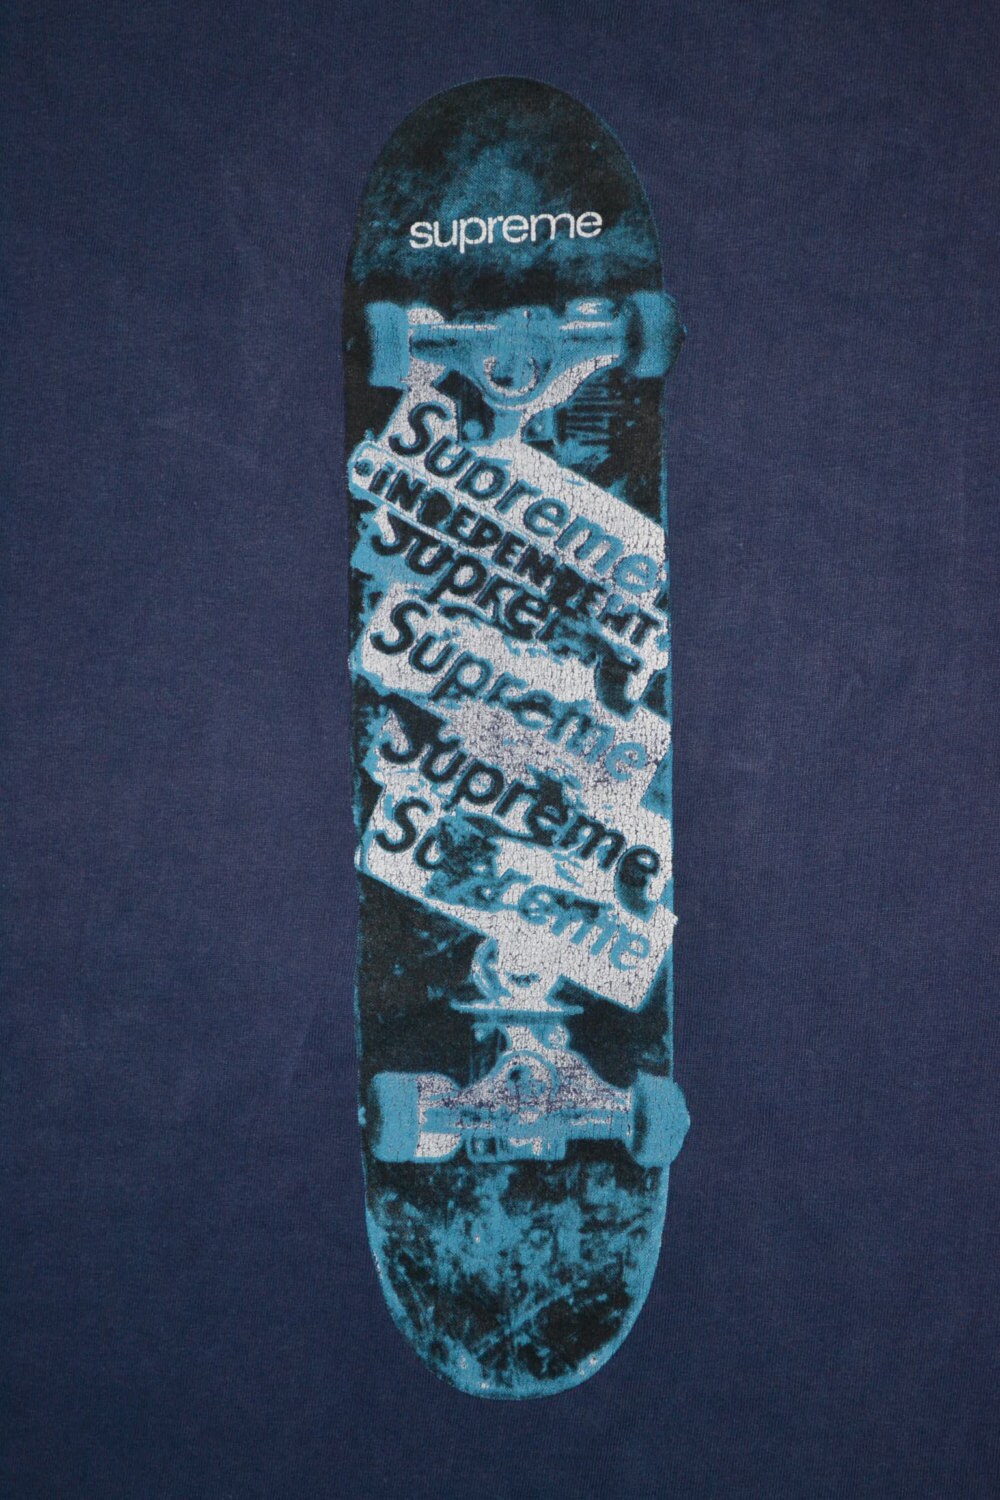 supreme skateboard deck